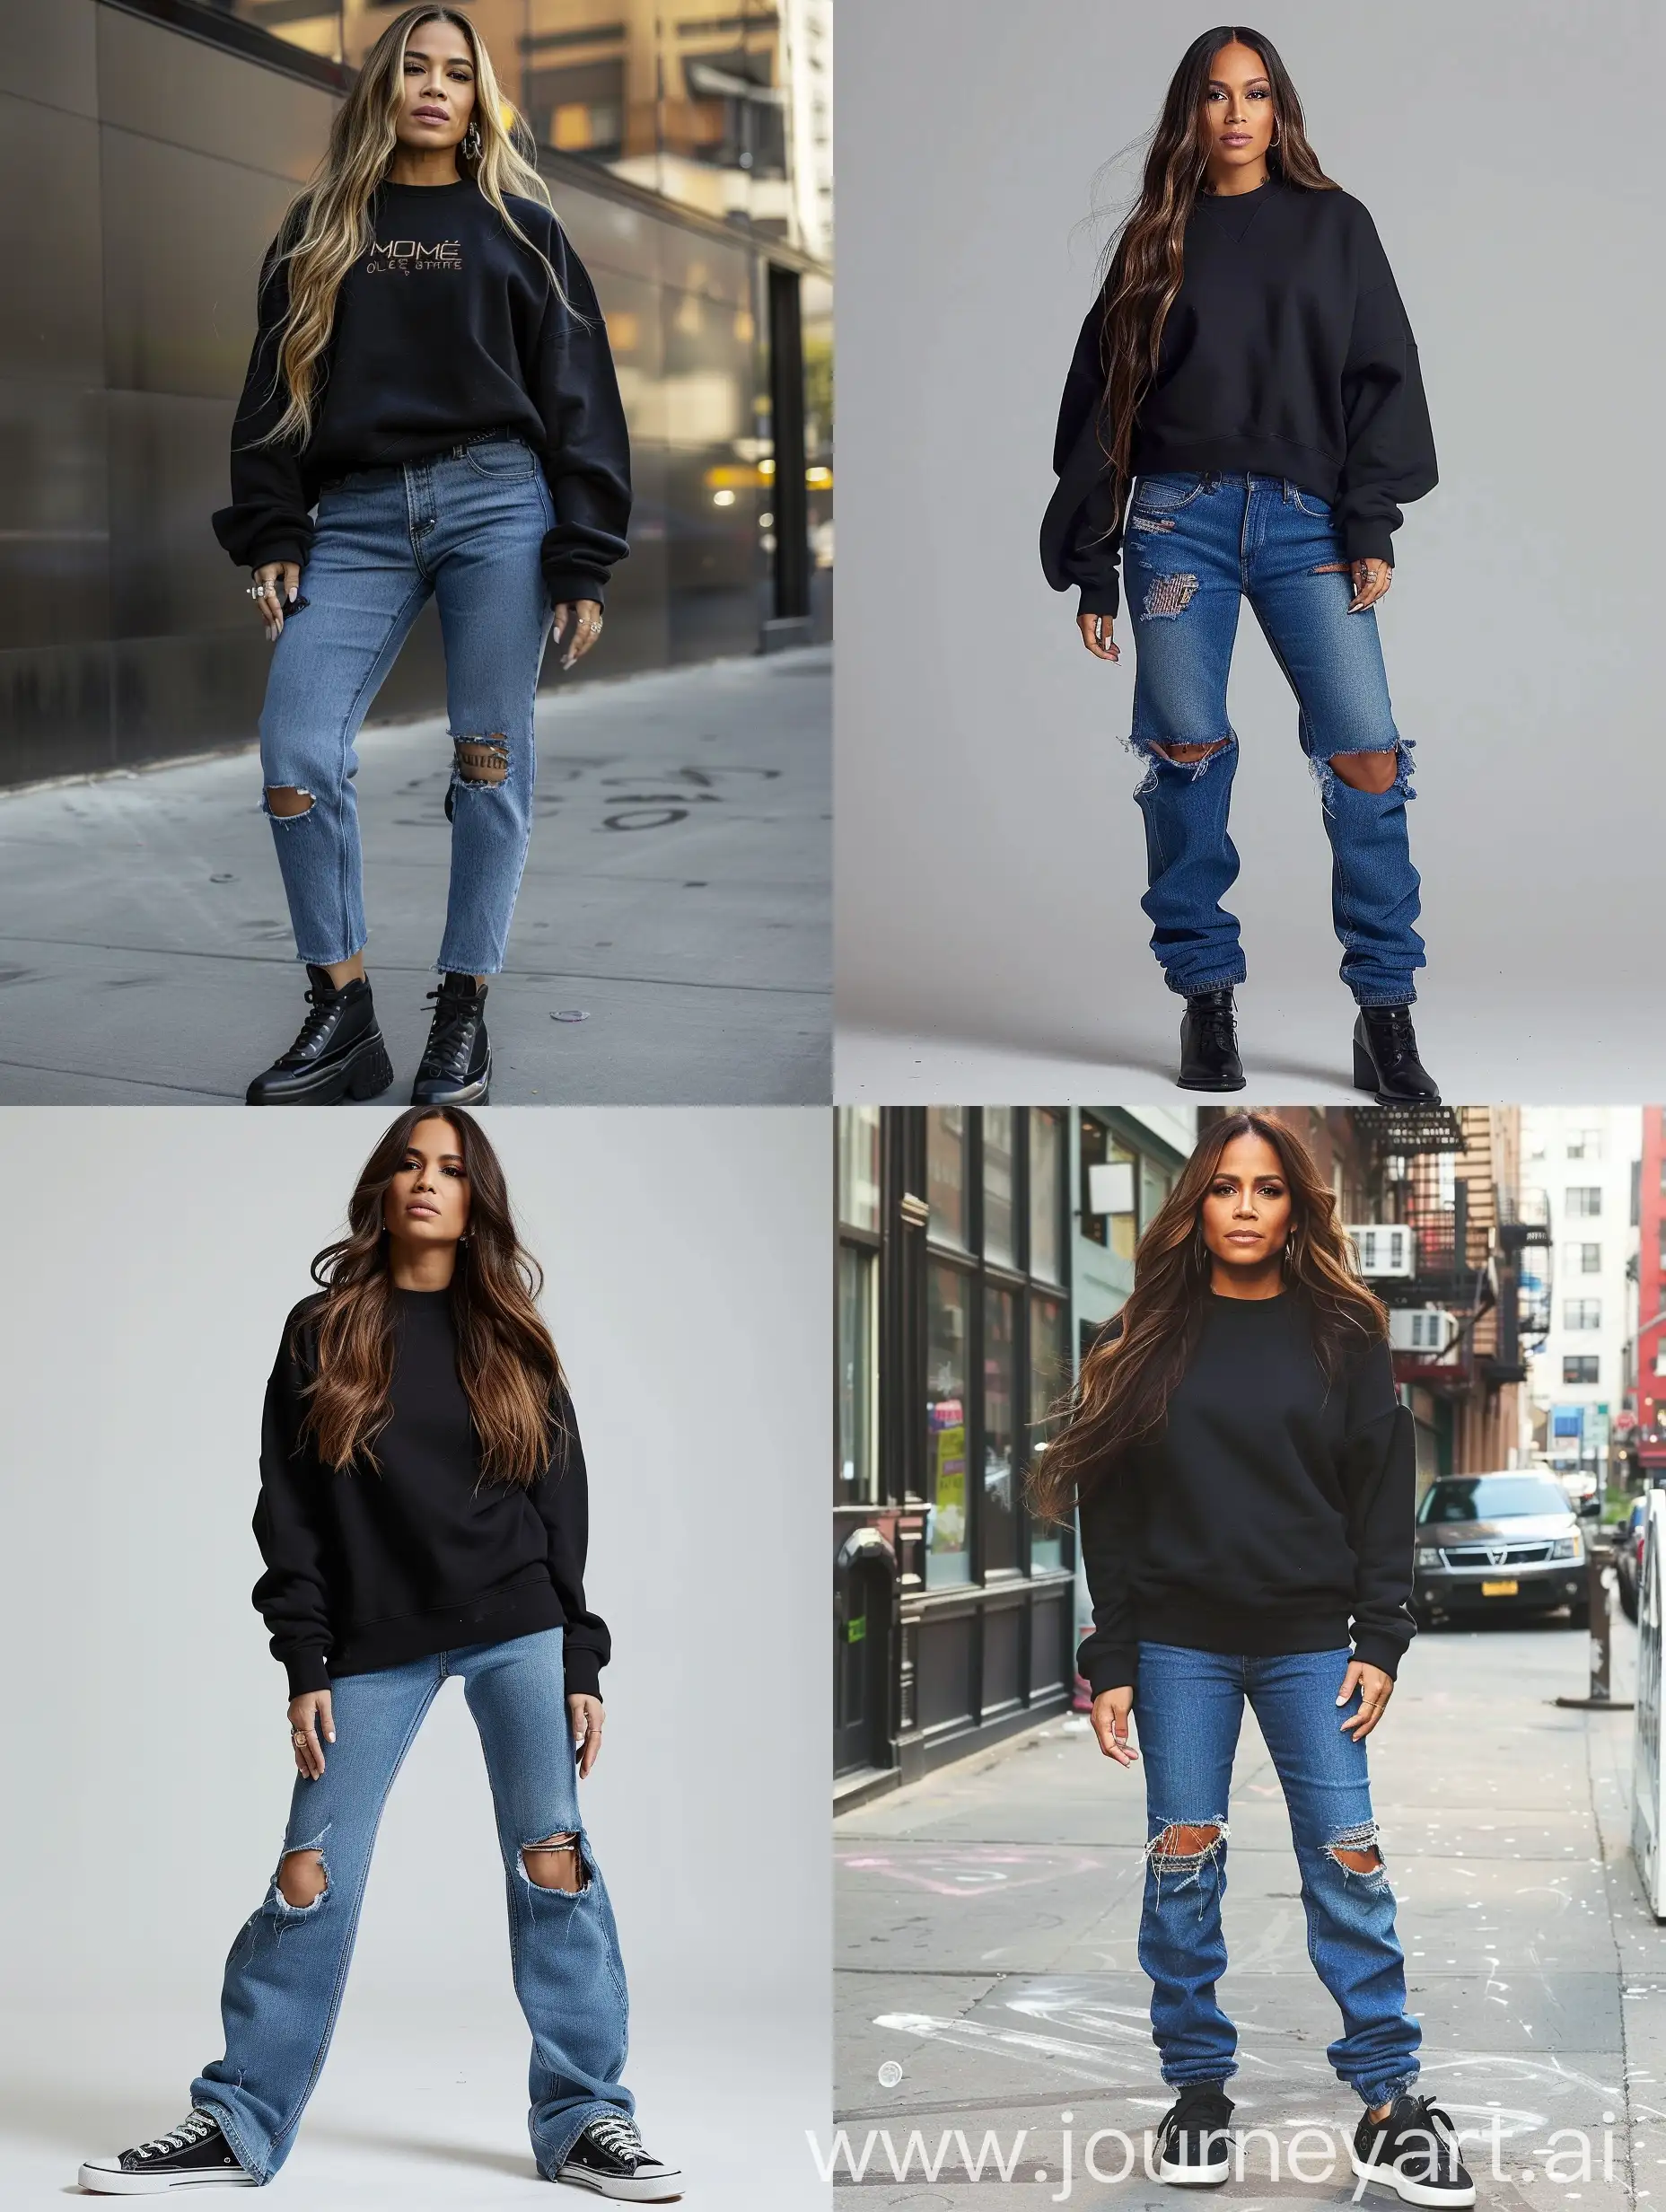 Jennifer-Lopez-in-Stylish-Black-Sweatshirt-and-Blue-Jeans-Fashionable-FullLength-Portrait